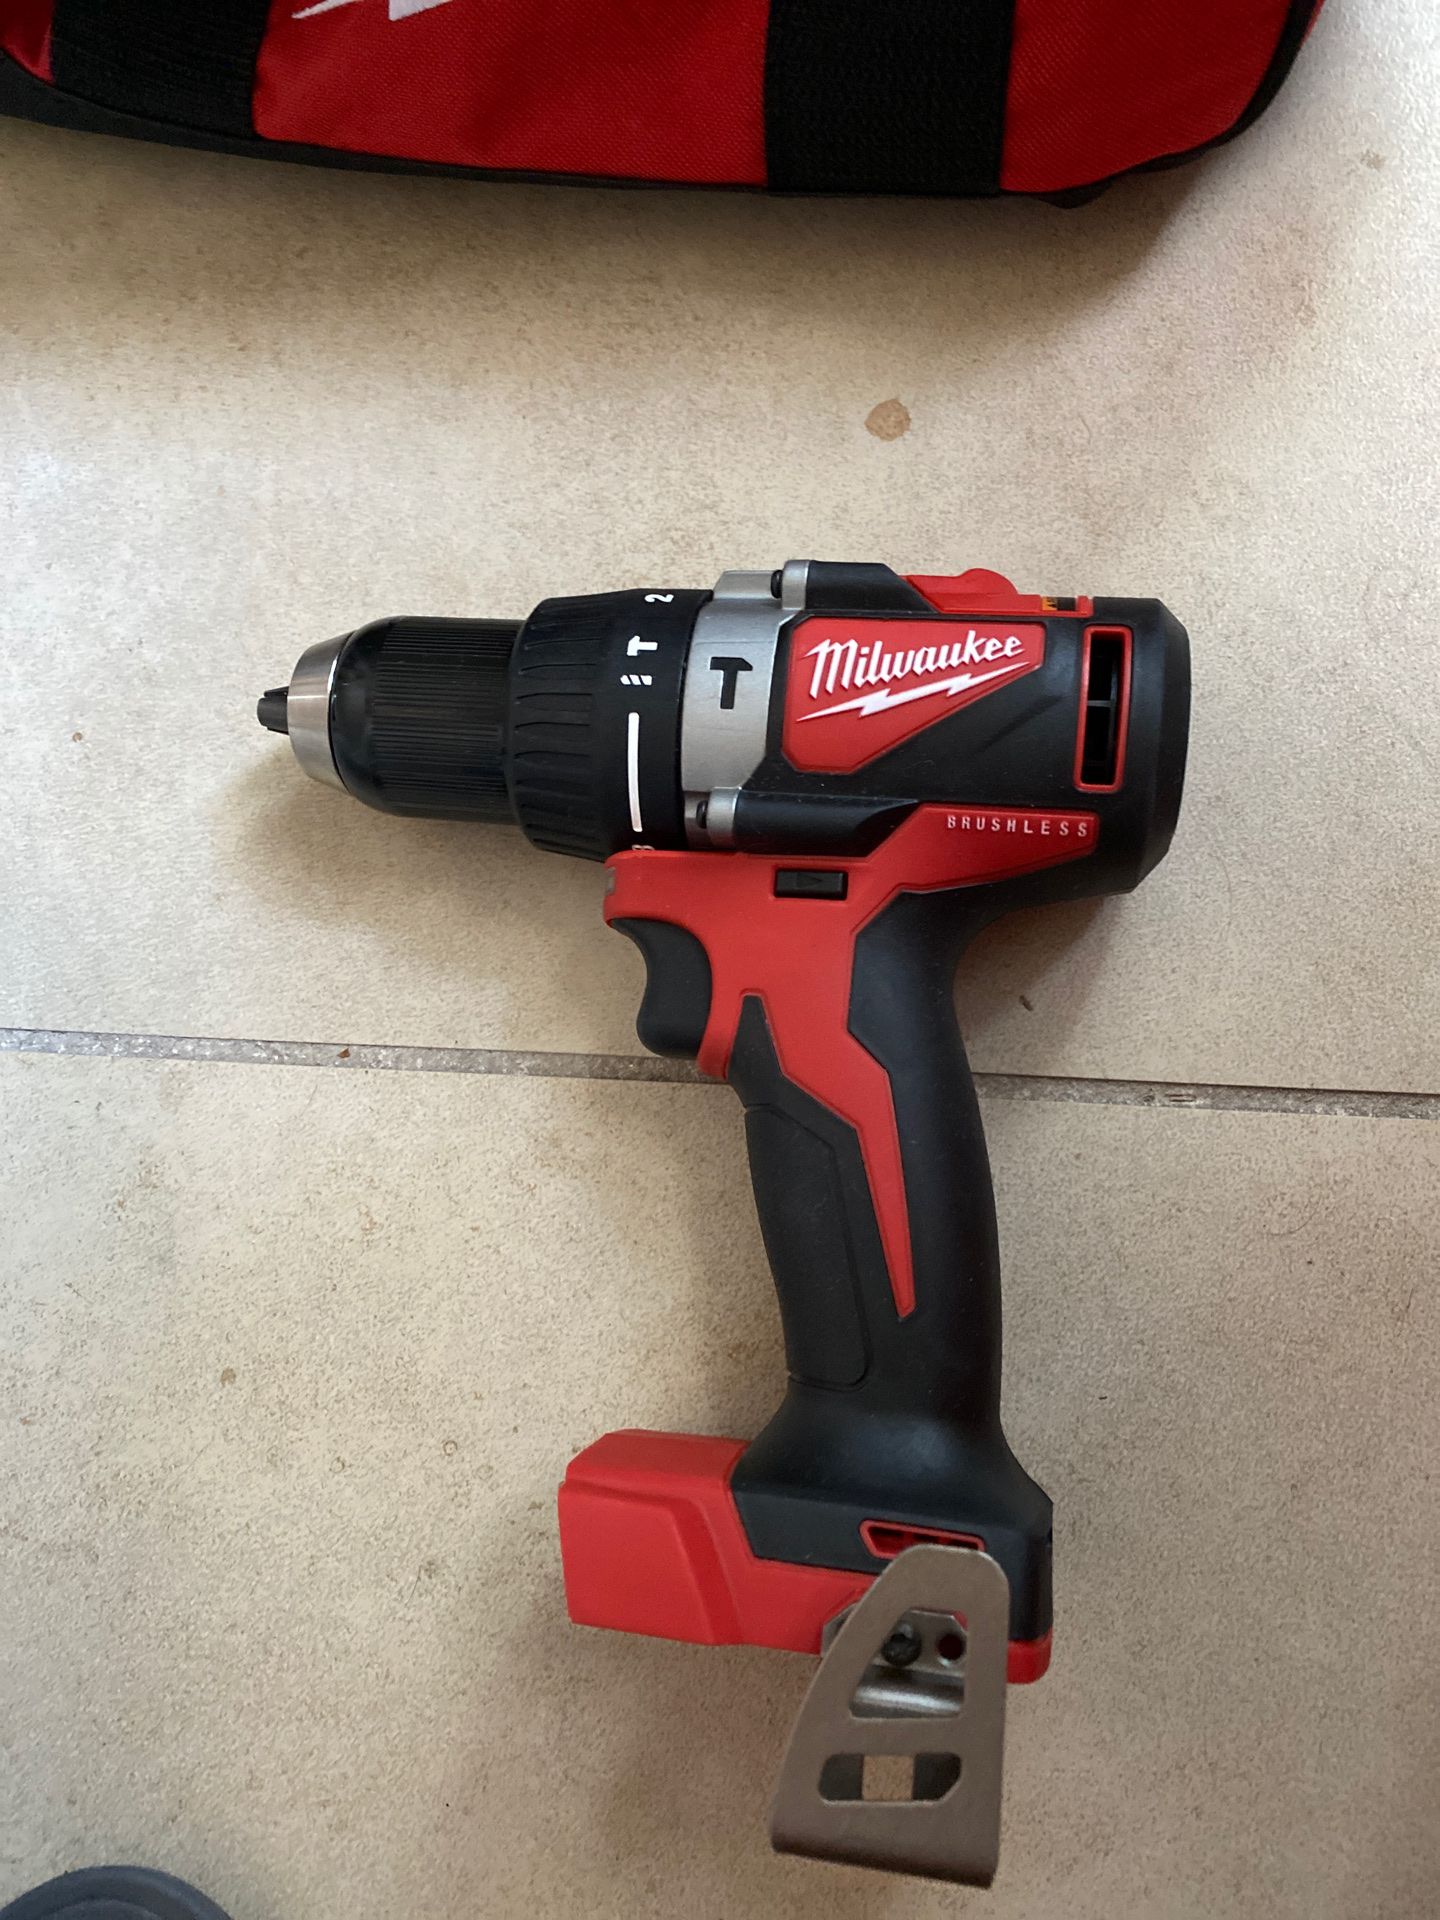 Hammer drill cordless brushless Milwaukee